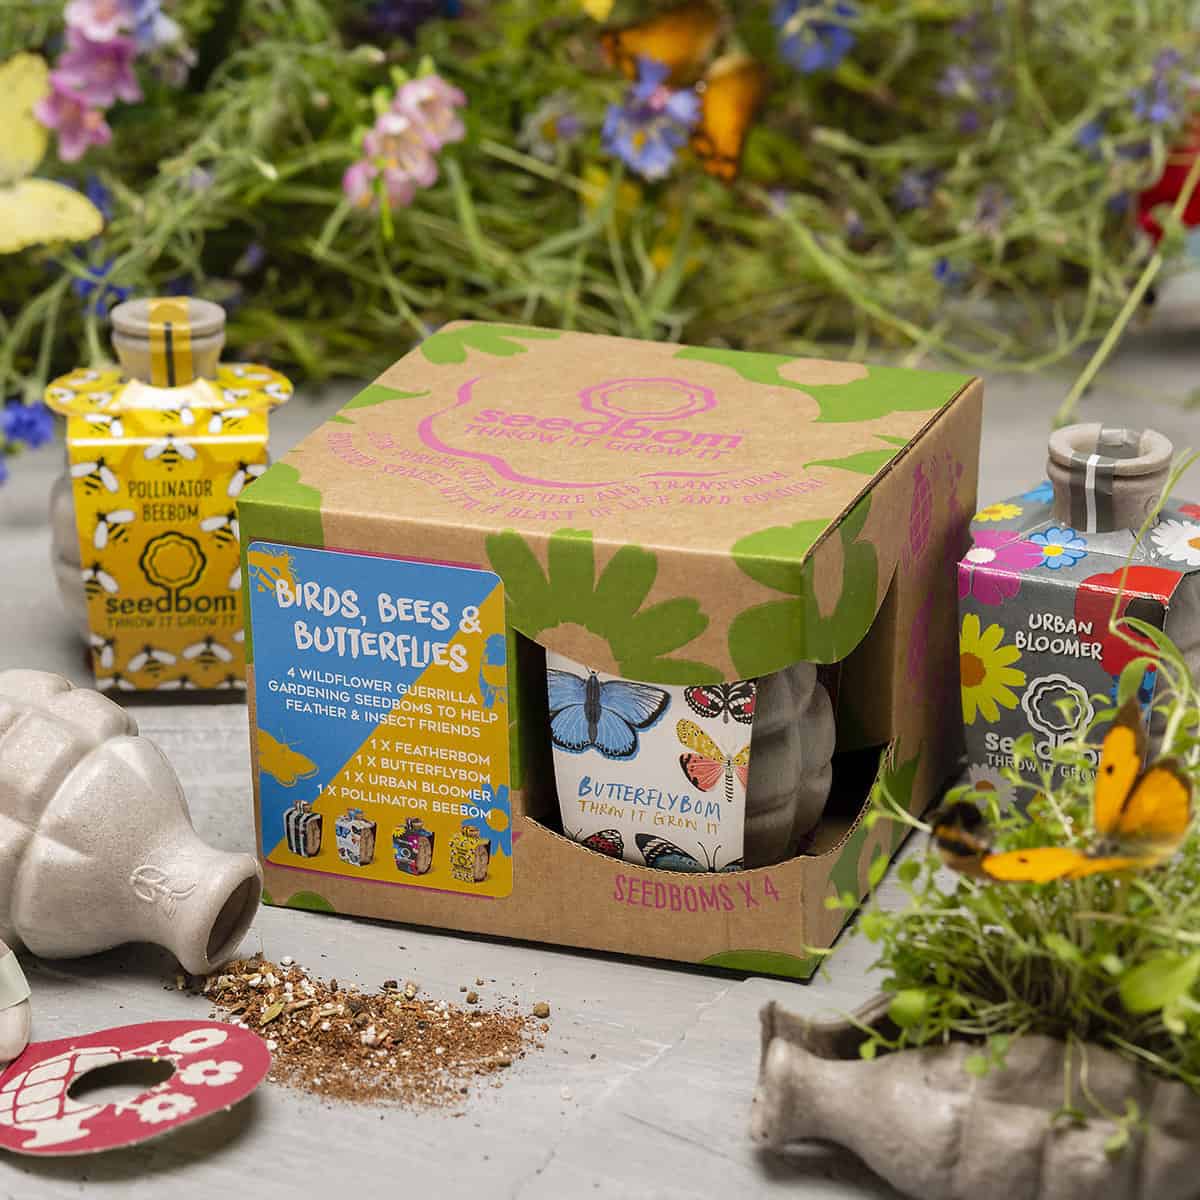 birds bees and butterflies seedbom gift box